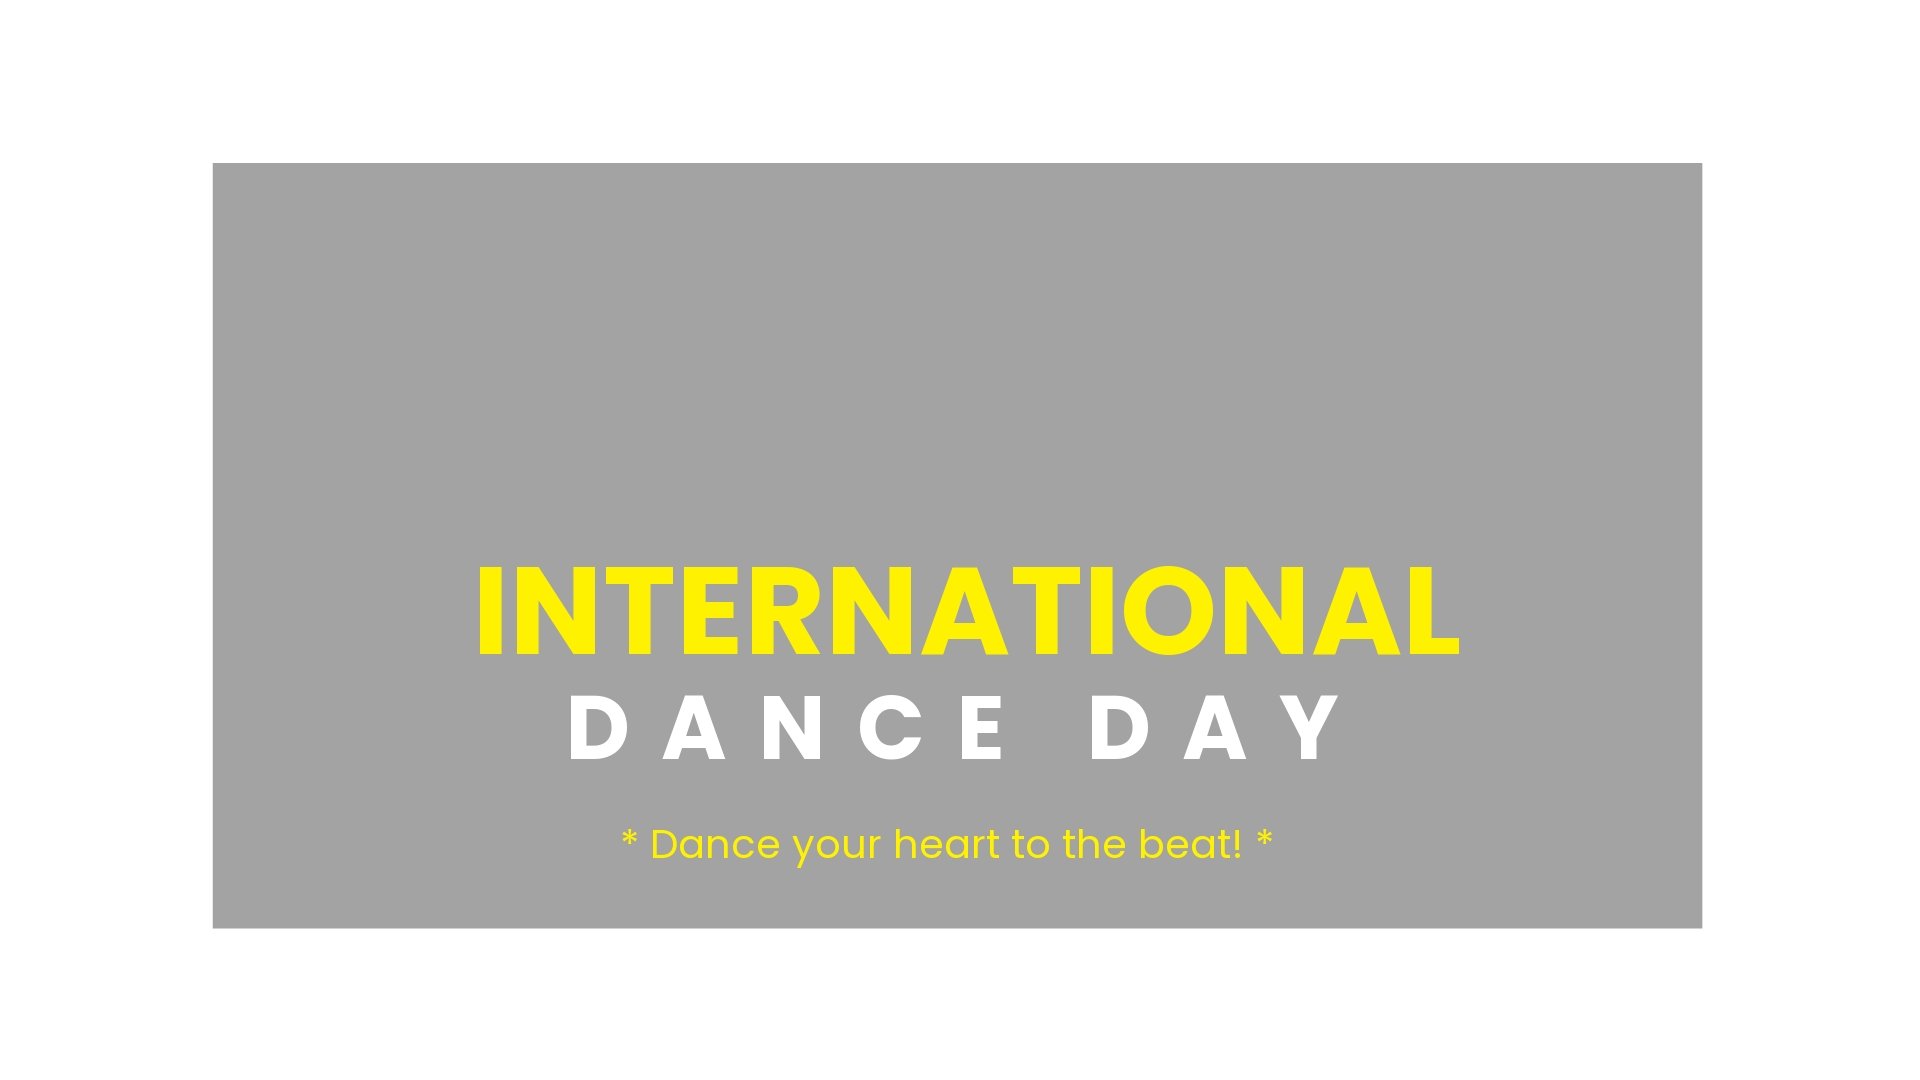 International Dance Day Video Template